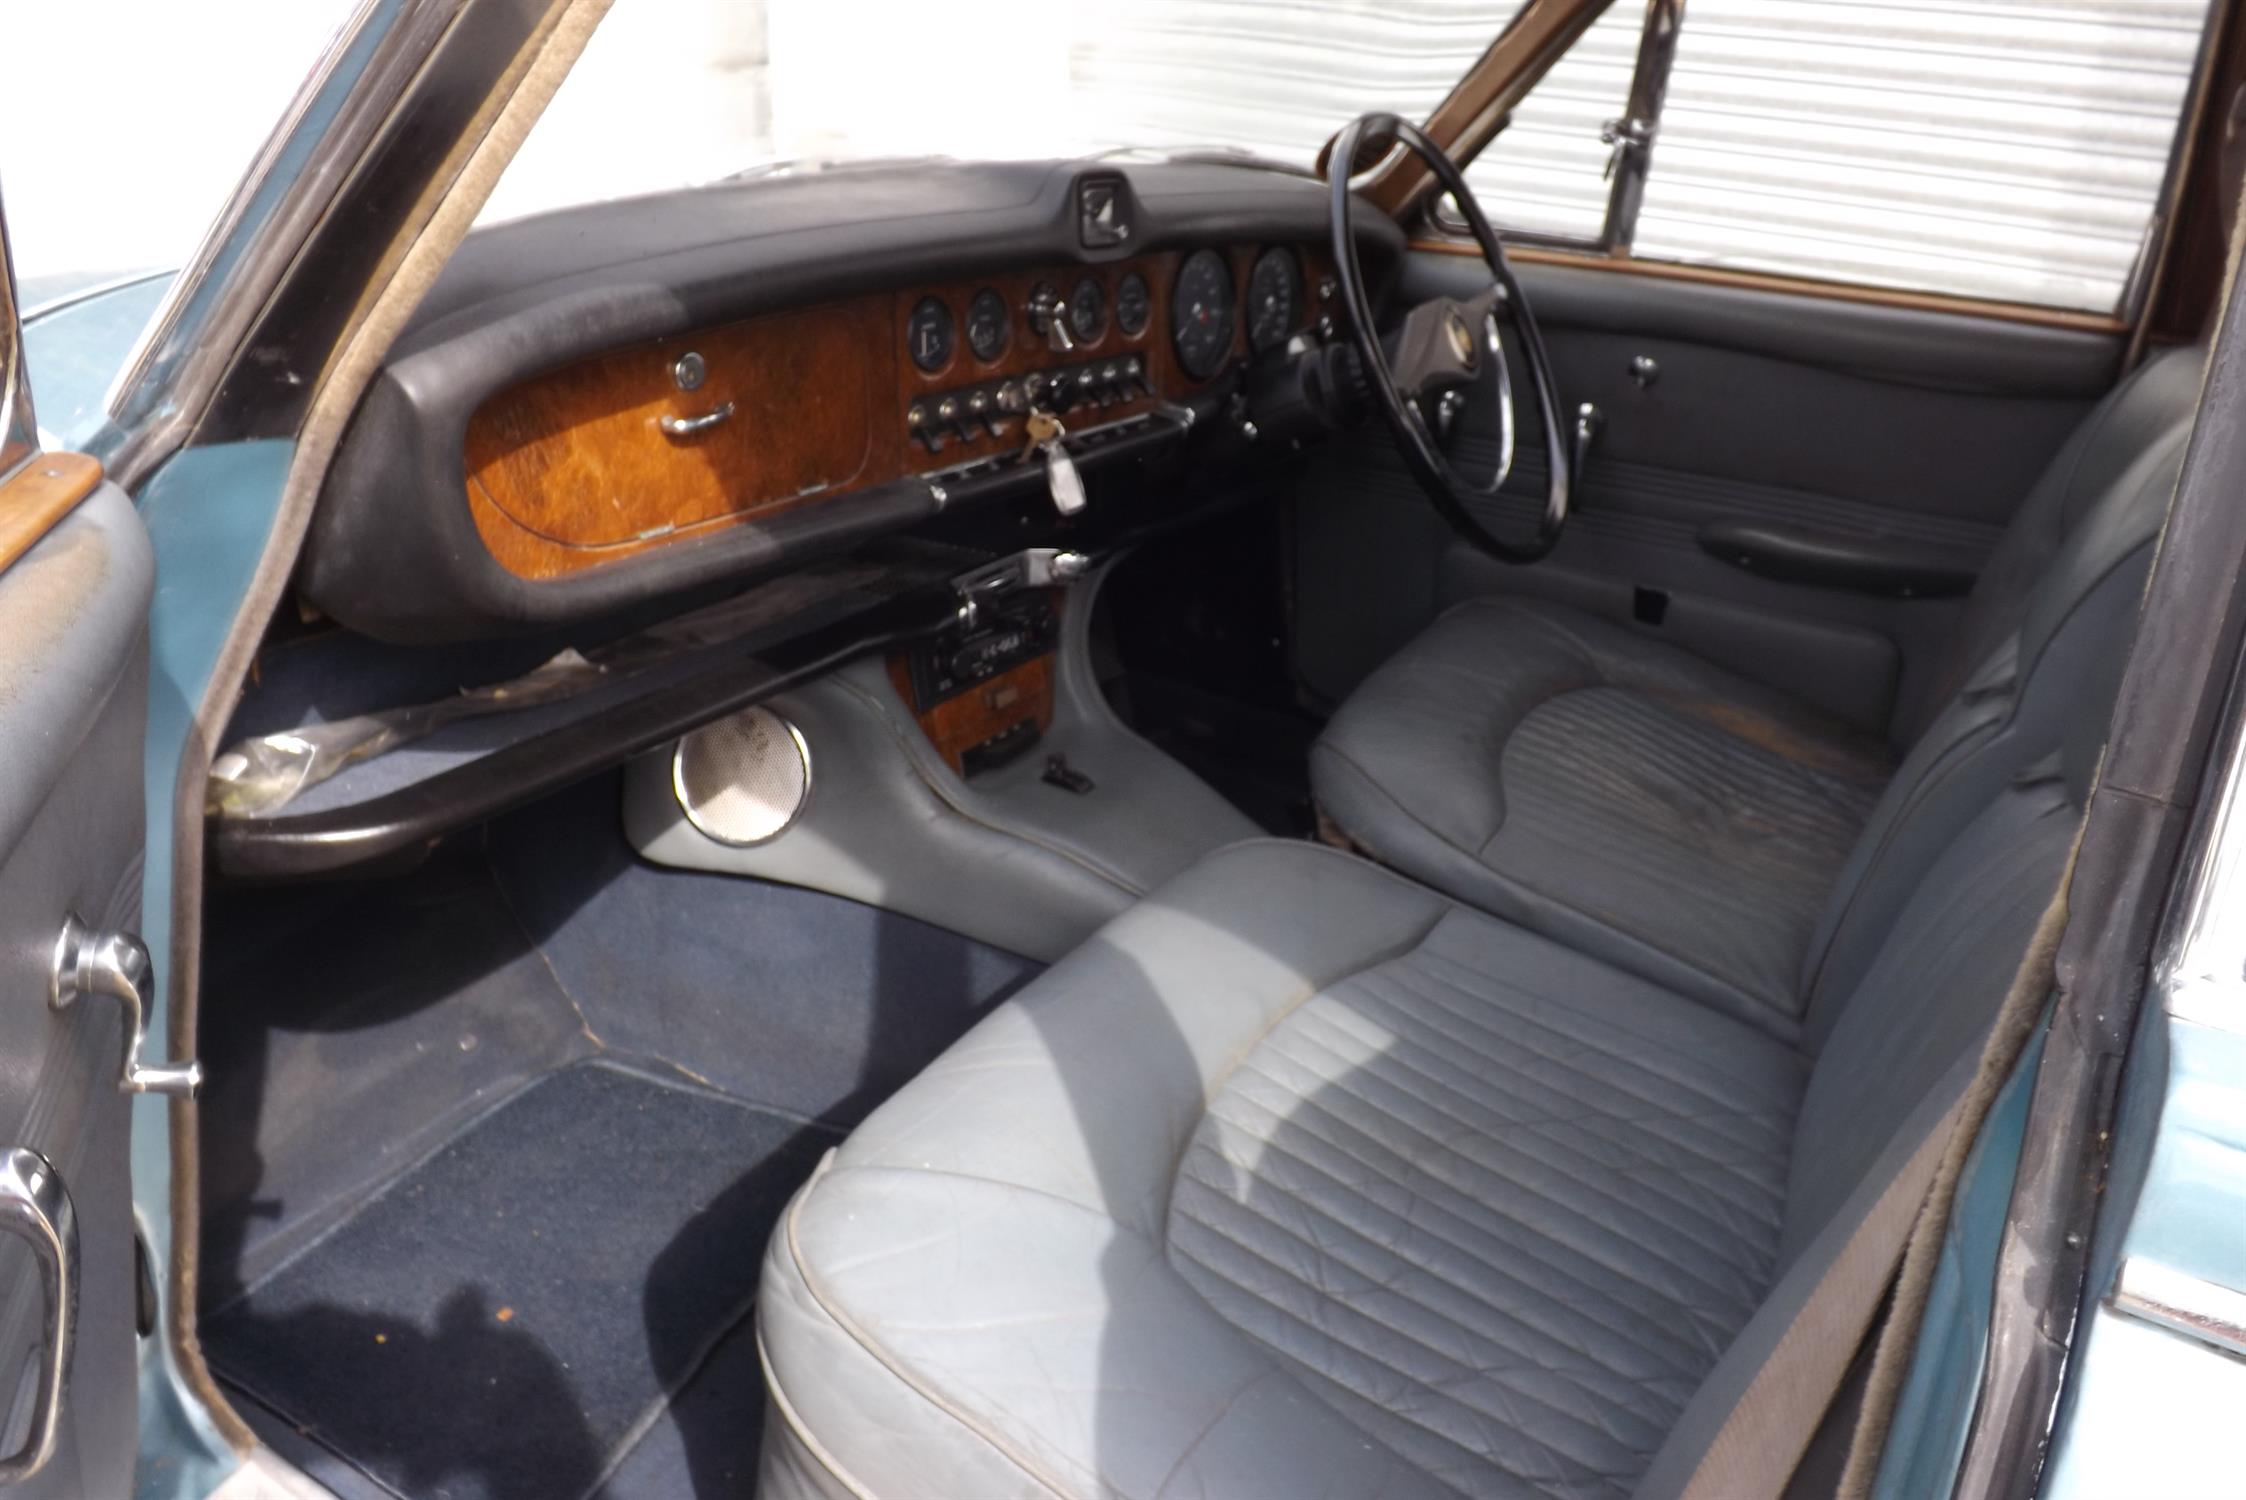 1968 Jaguar 420 Saloon - Image 5 of 10